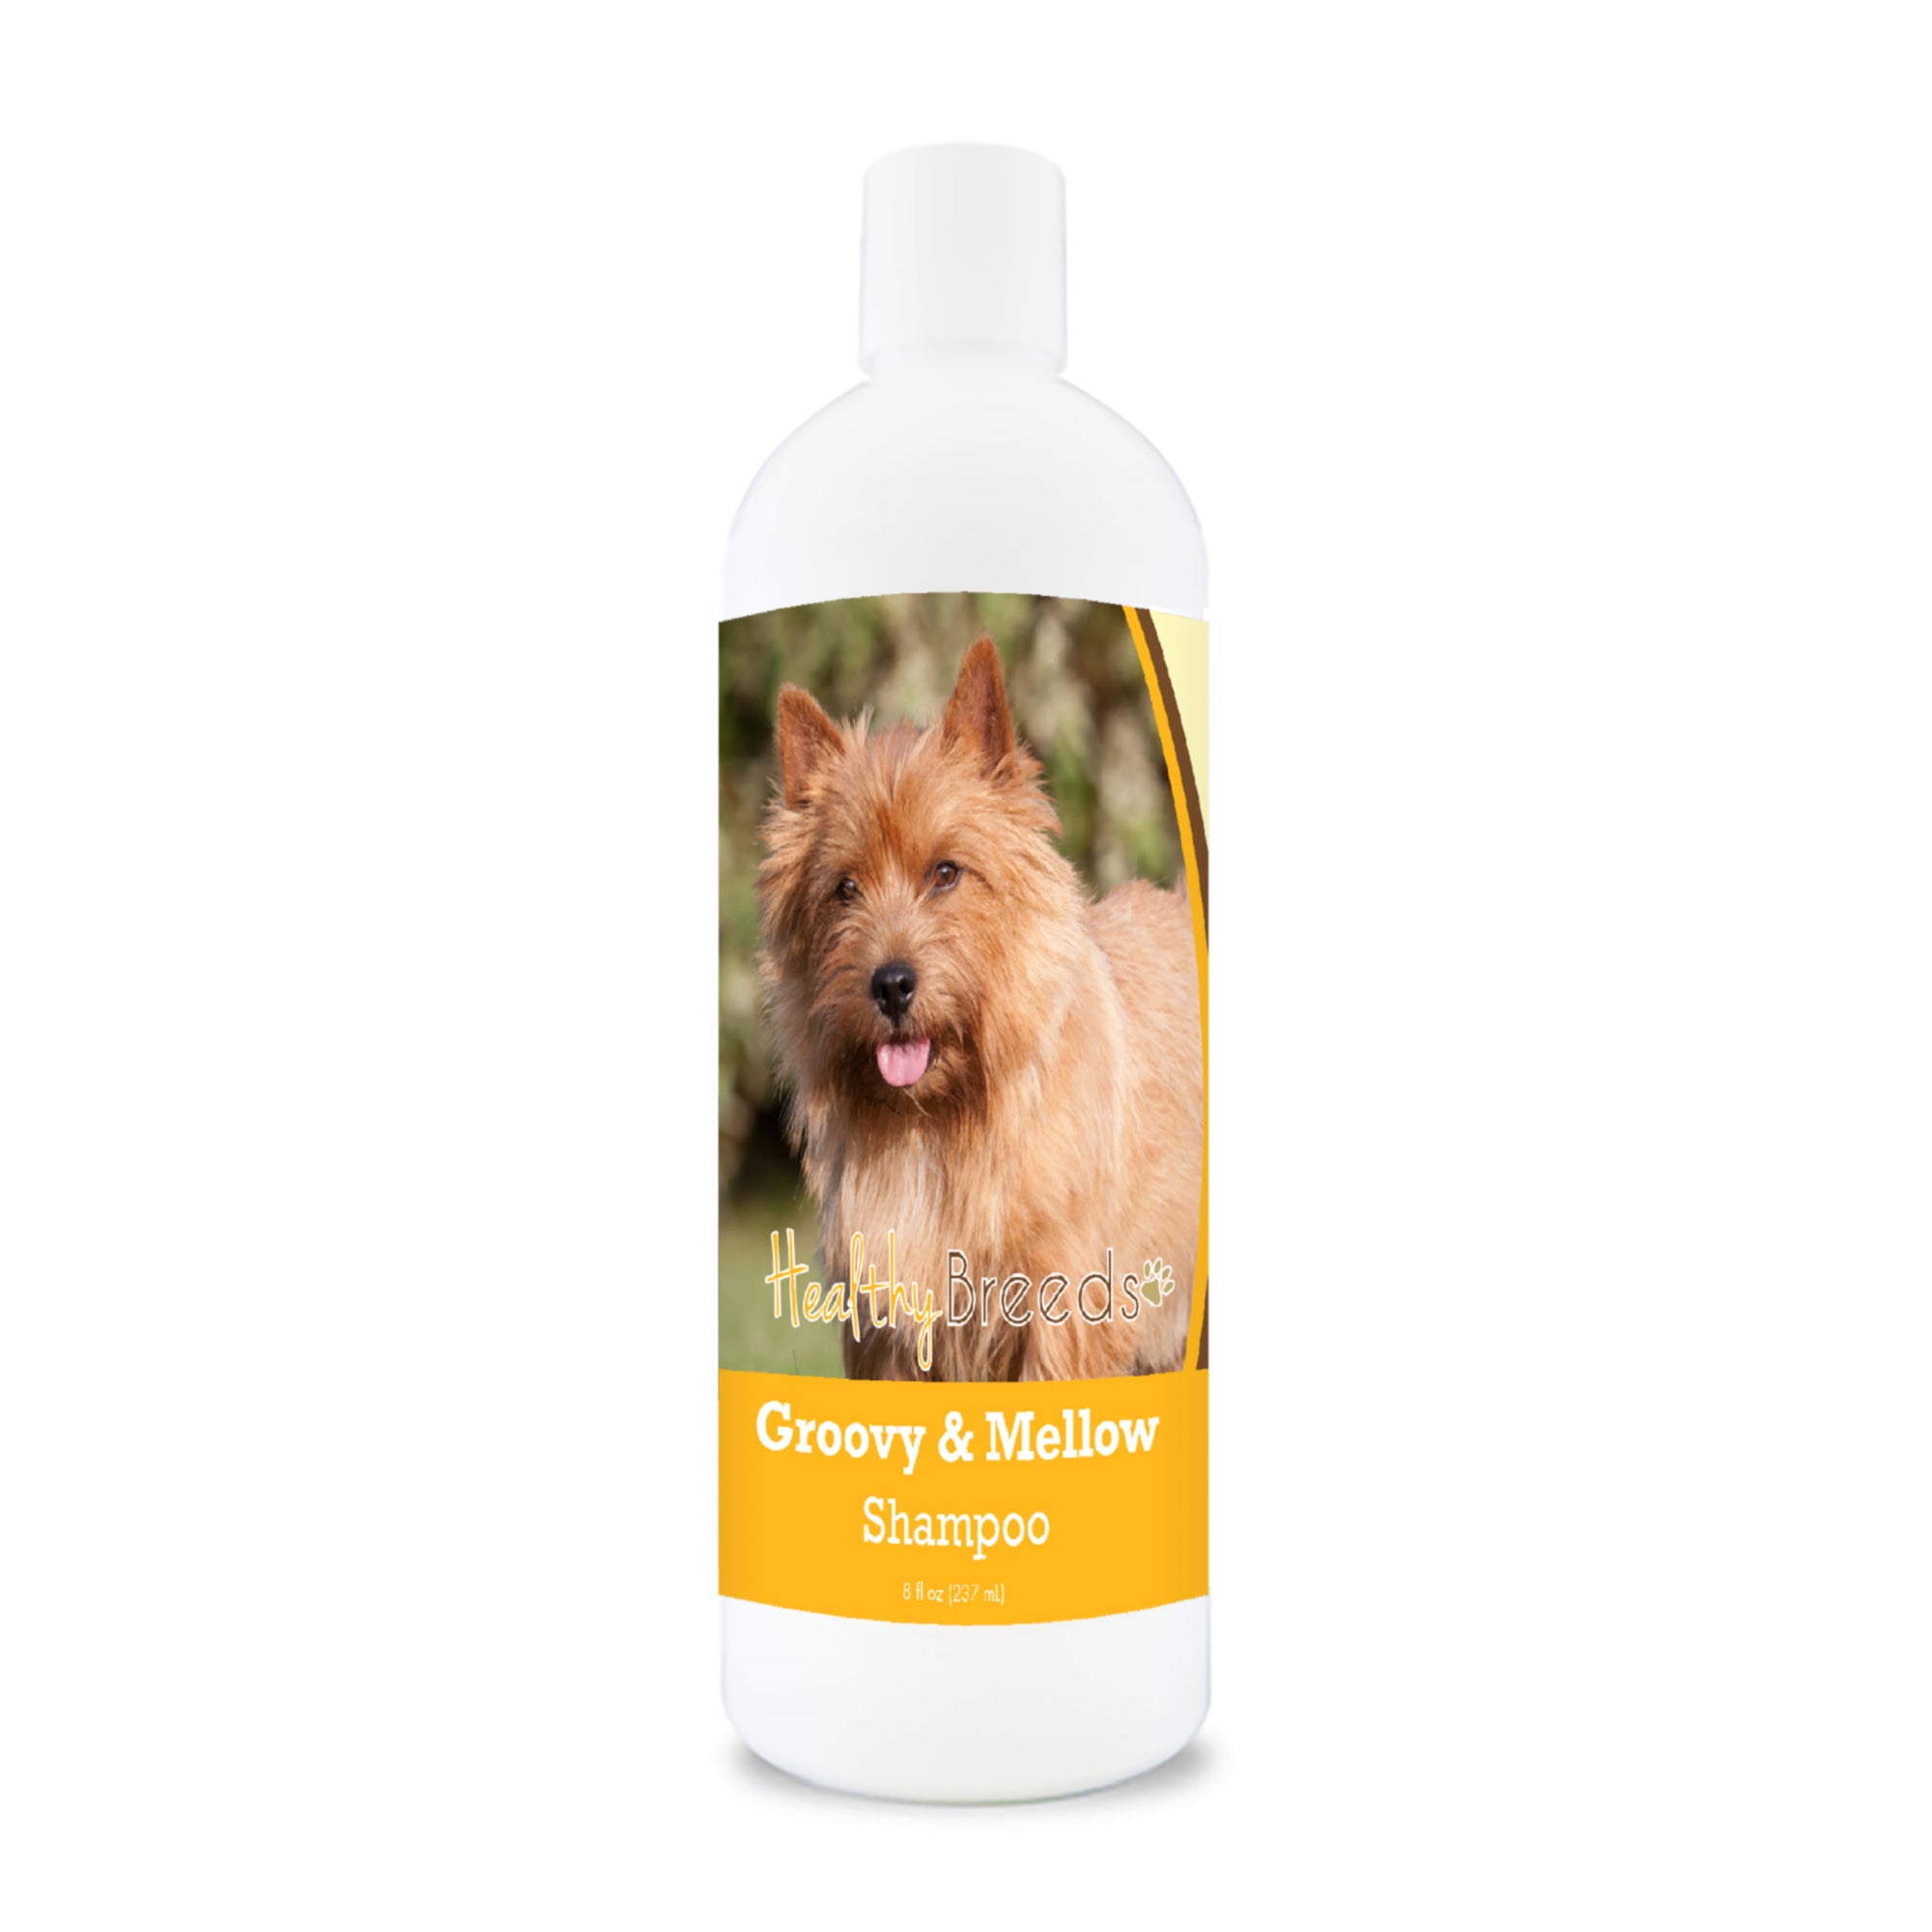 Norwich Terrier Groovy & Mellow Shampoo 8 oz